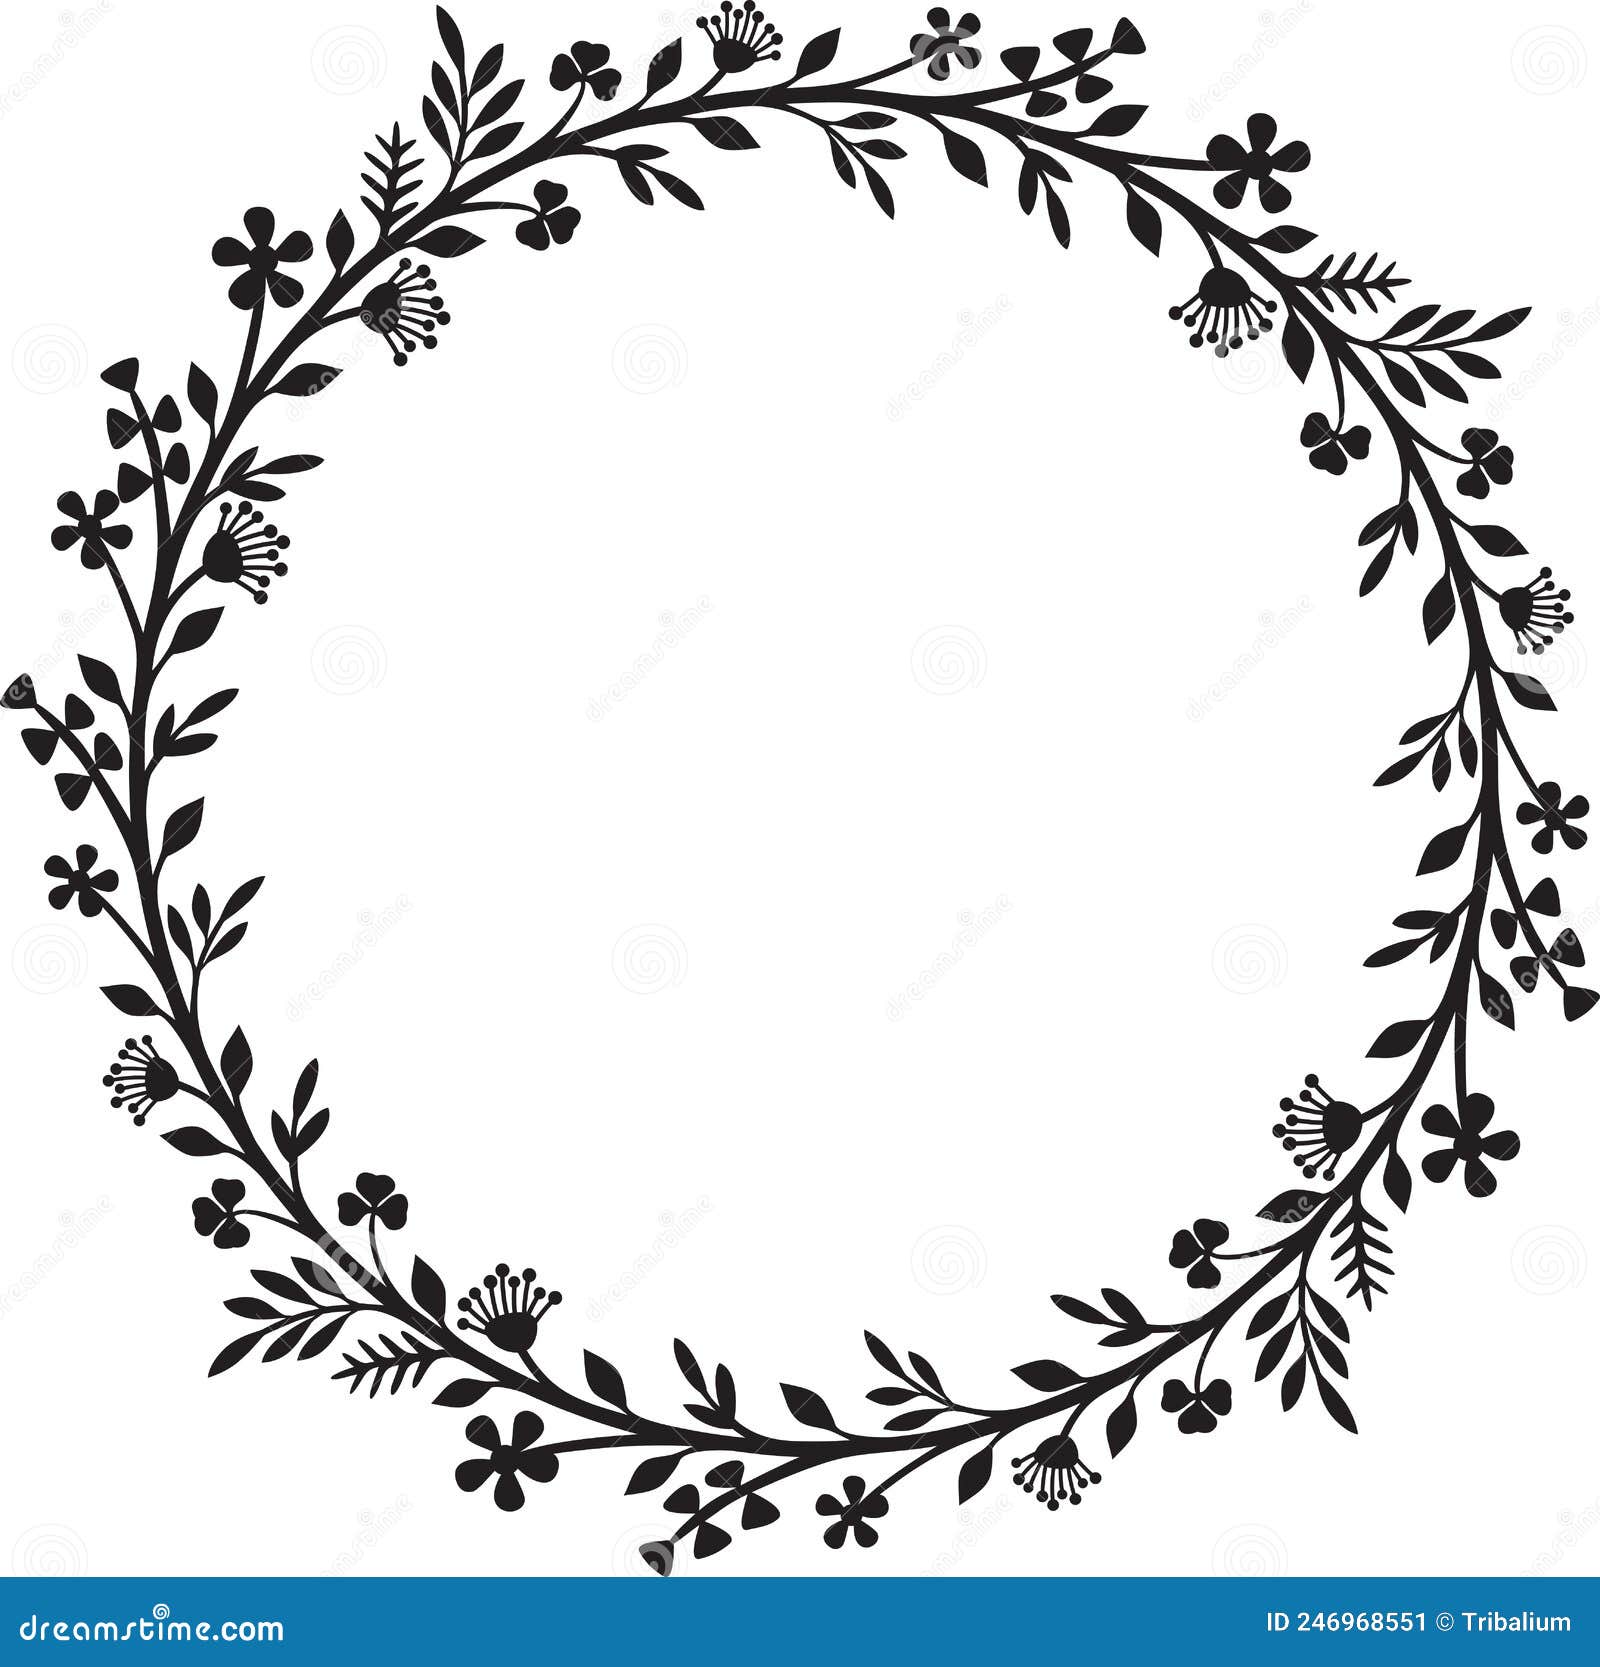 Floral circle frame Royalty Free Vector Image - VectorStock